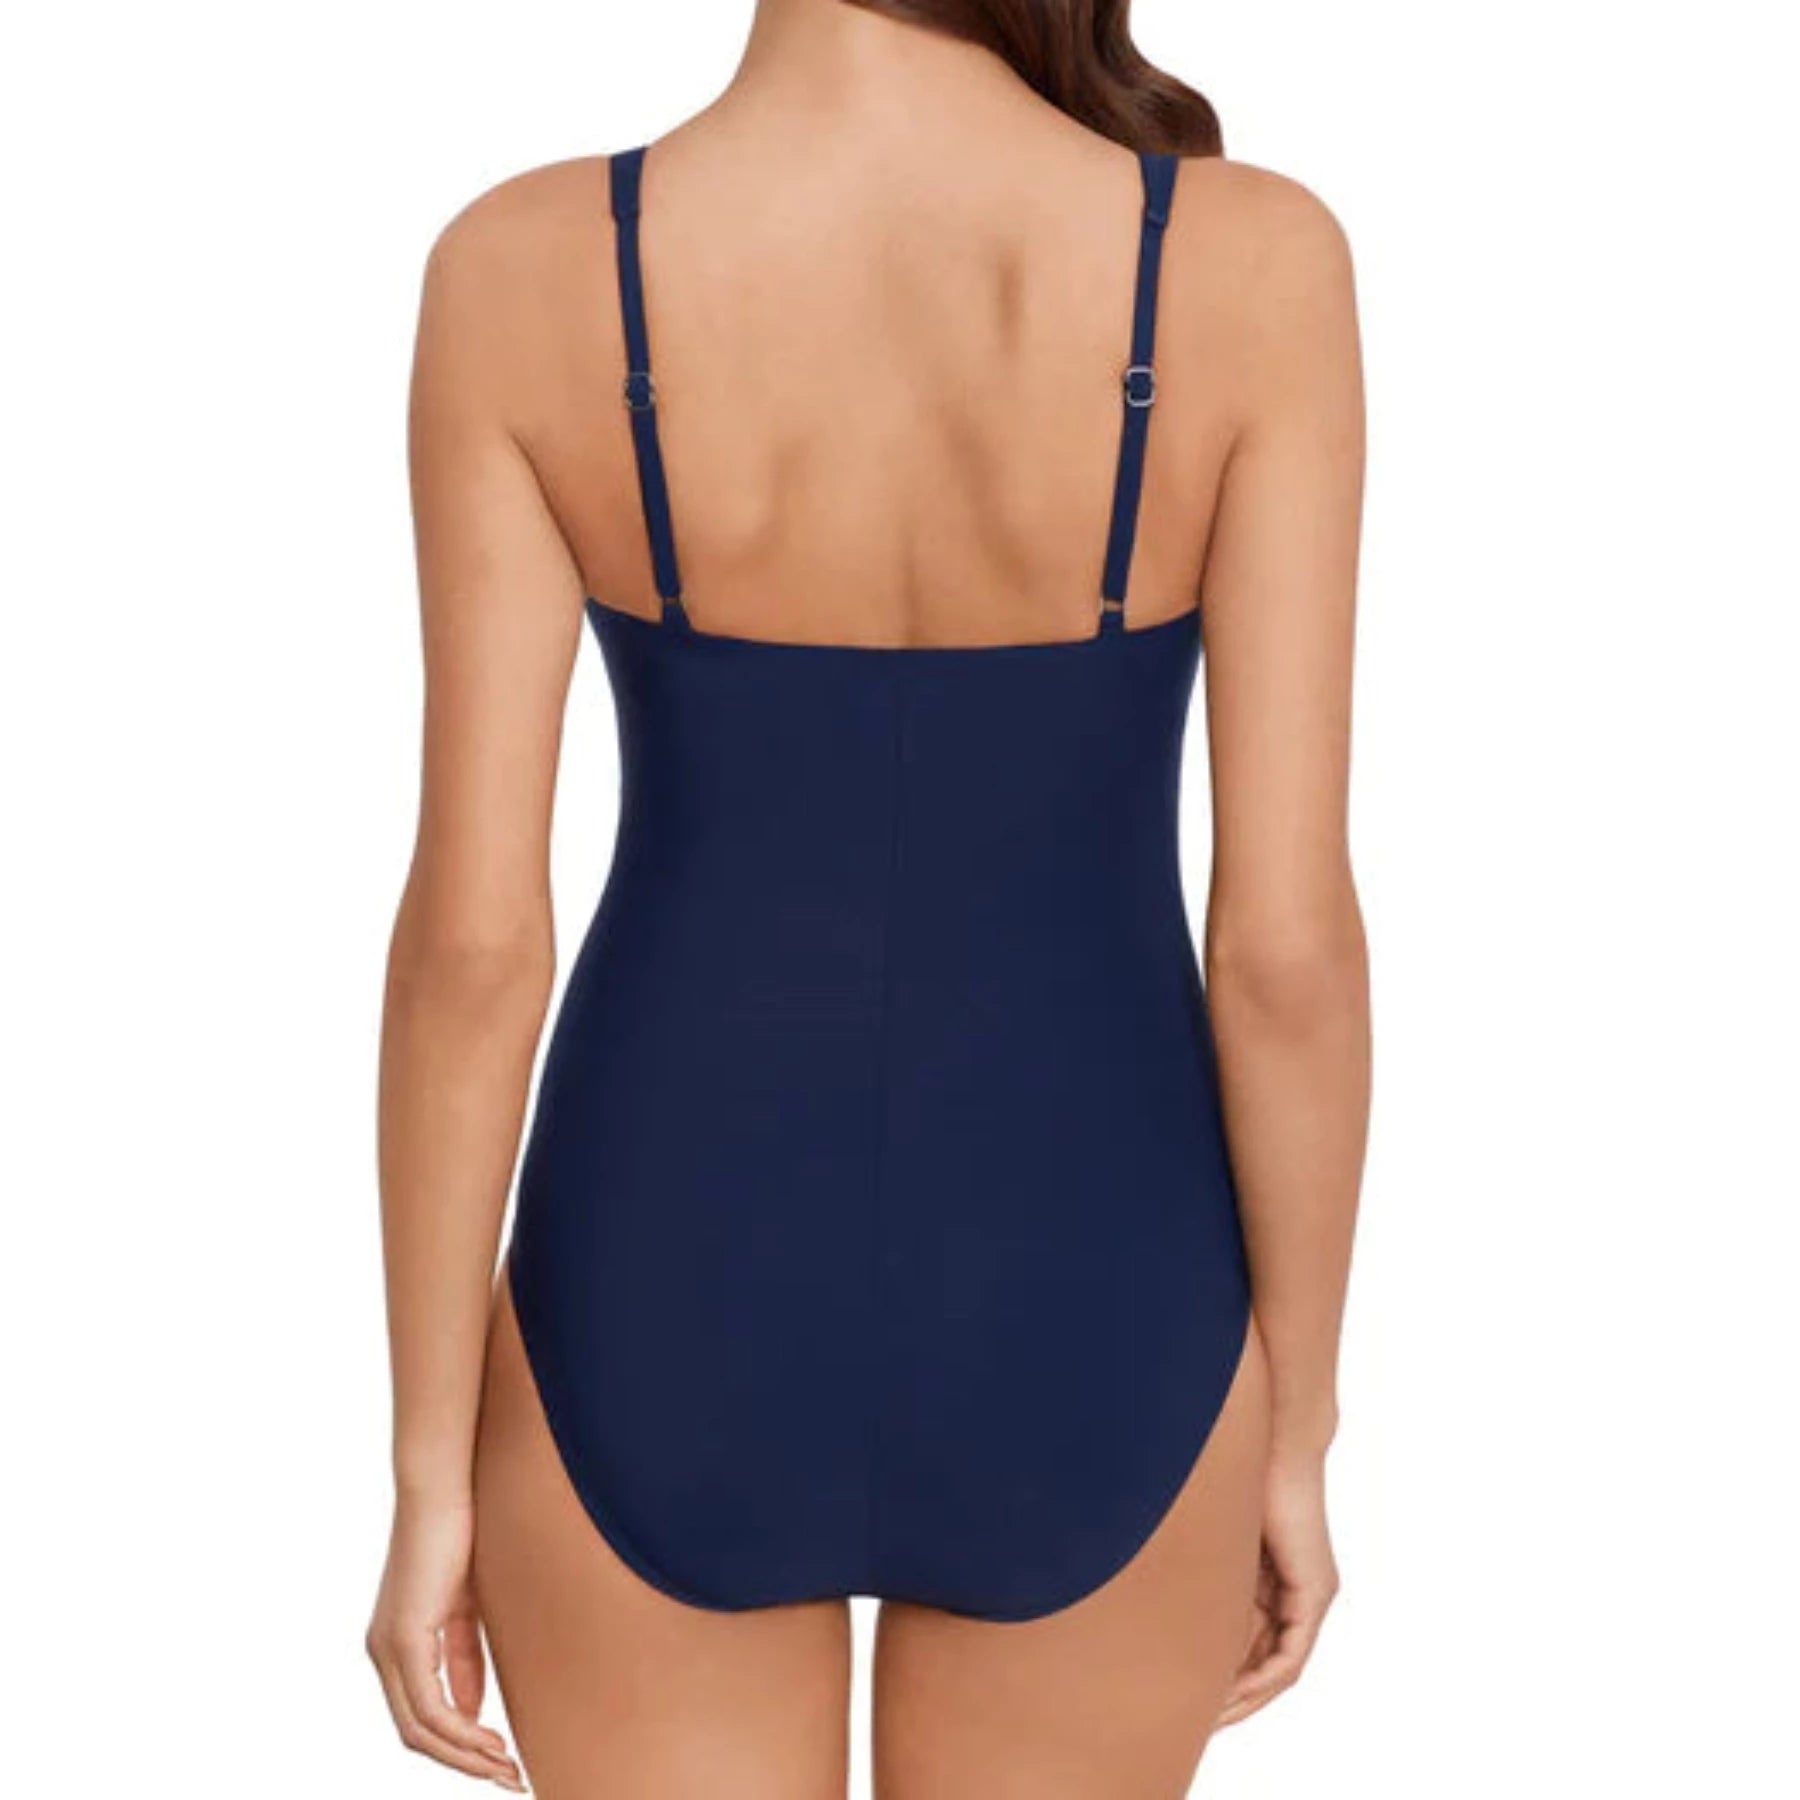 Morningstar Sansa One Piece Swimsuit 6017678 - Navy